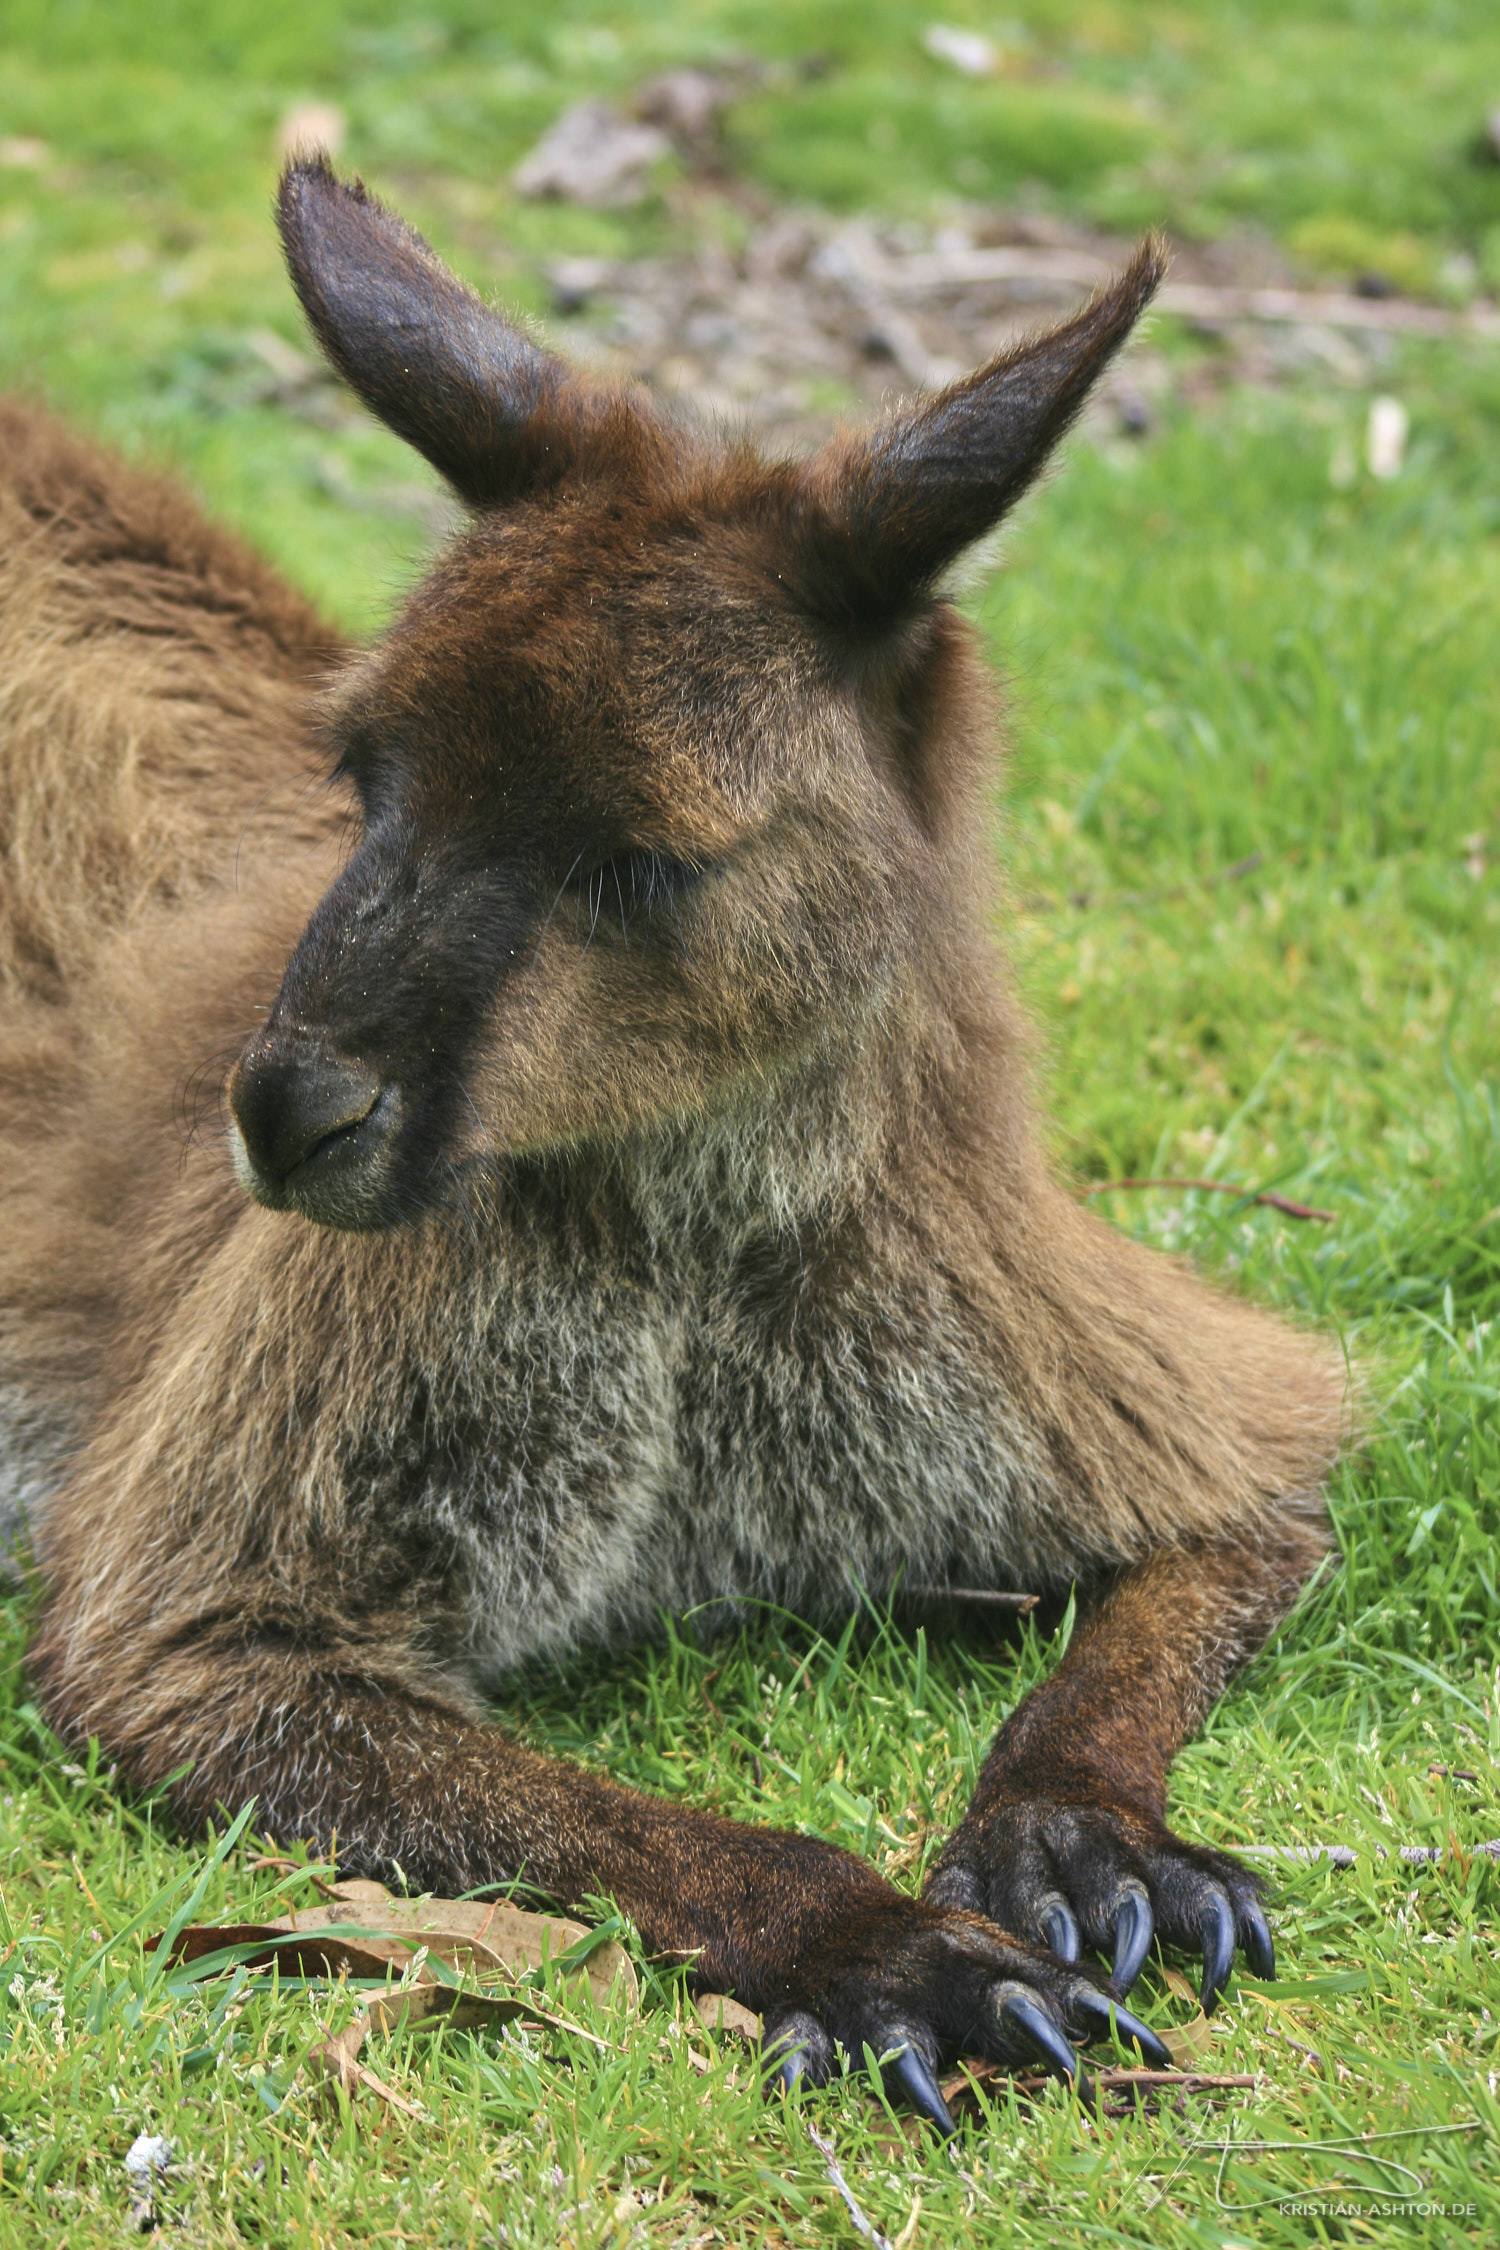 Excursion to Cleland Wildlife Park, to show Ralph the "dangerous" Australian animals